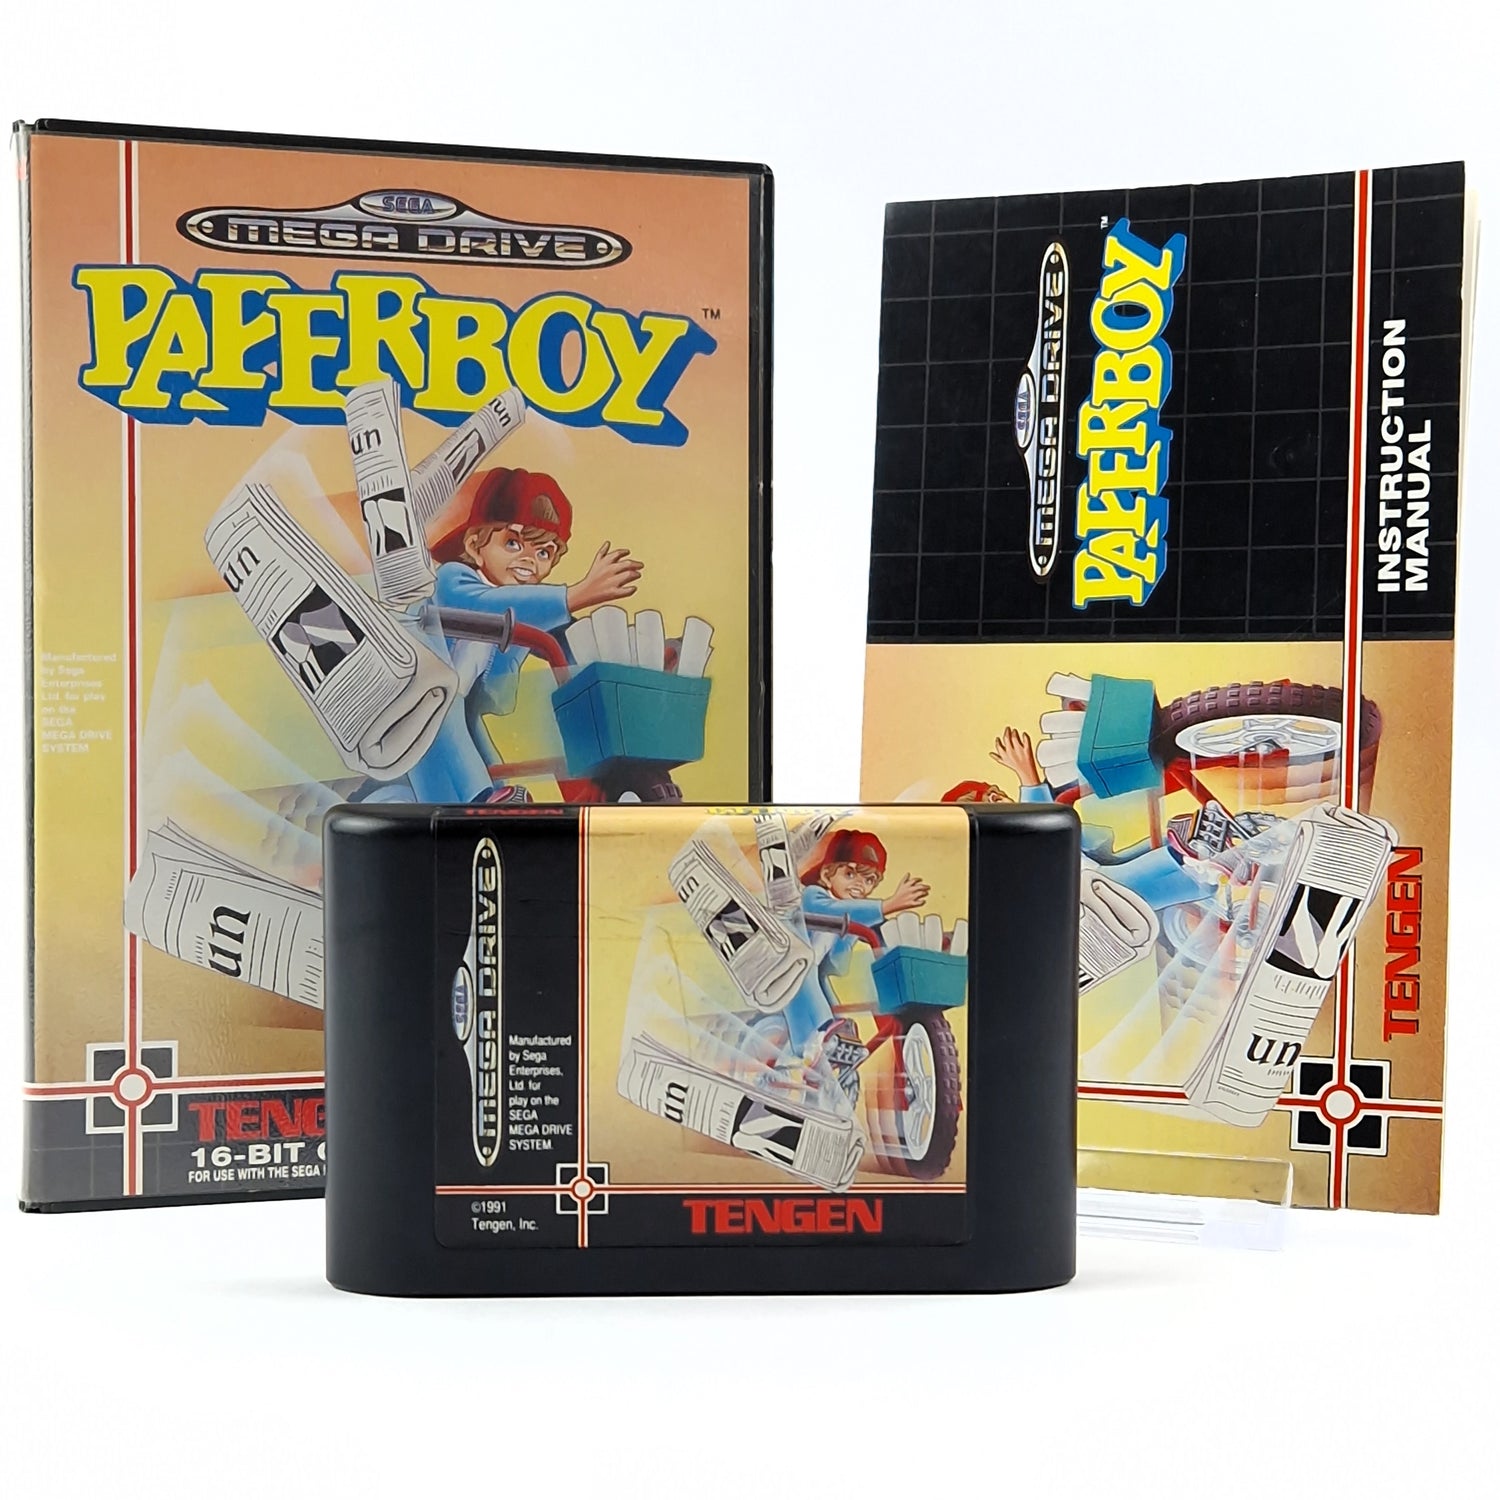 Sega Mega Drive Game: Paperboy - Module Instructions OVP cib / MD PAL GAME TENGEN